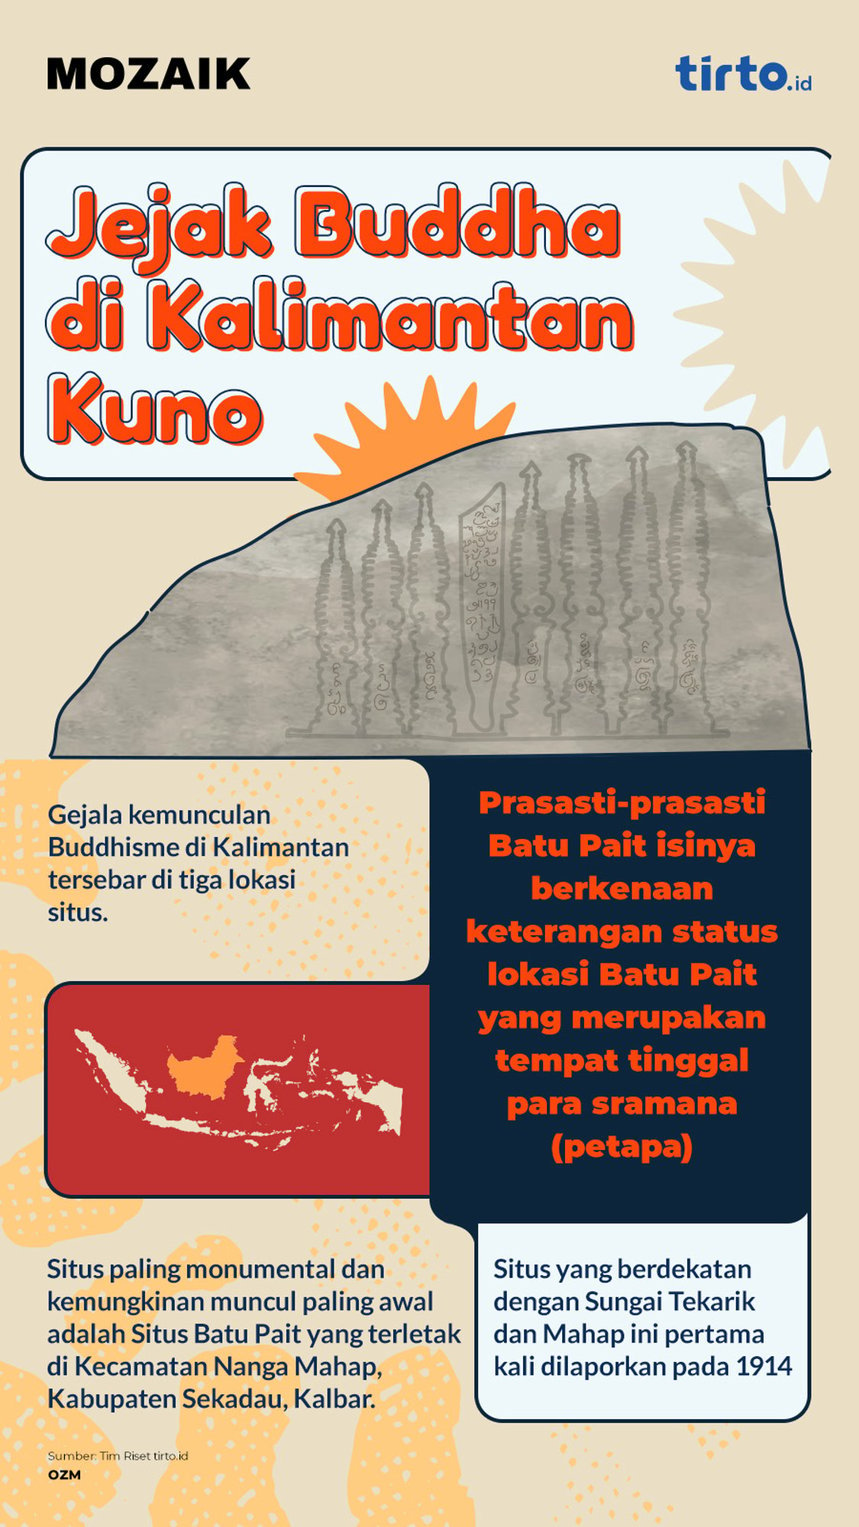 Infografik Mozaik Jejak Buddha di Kalimantan Kuno